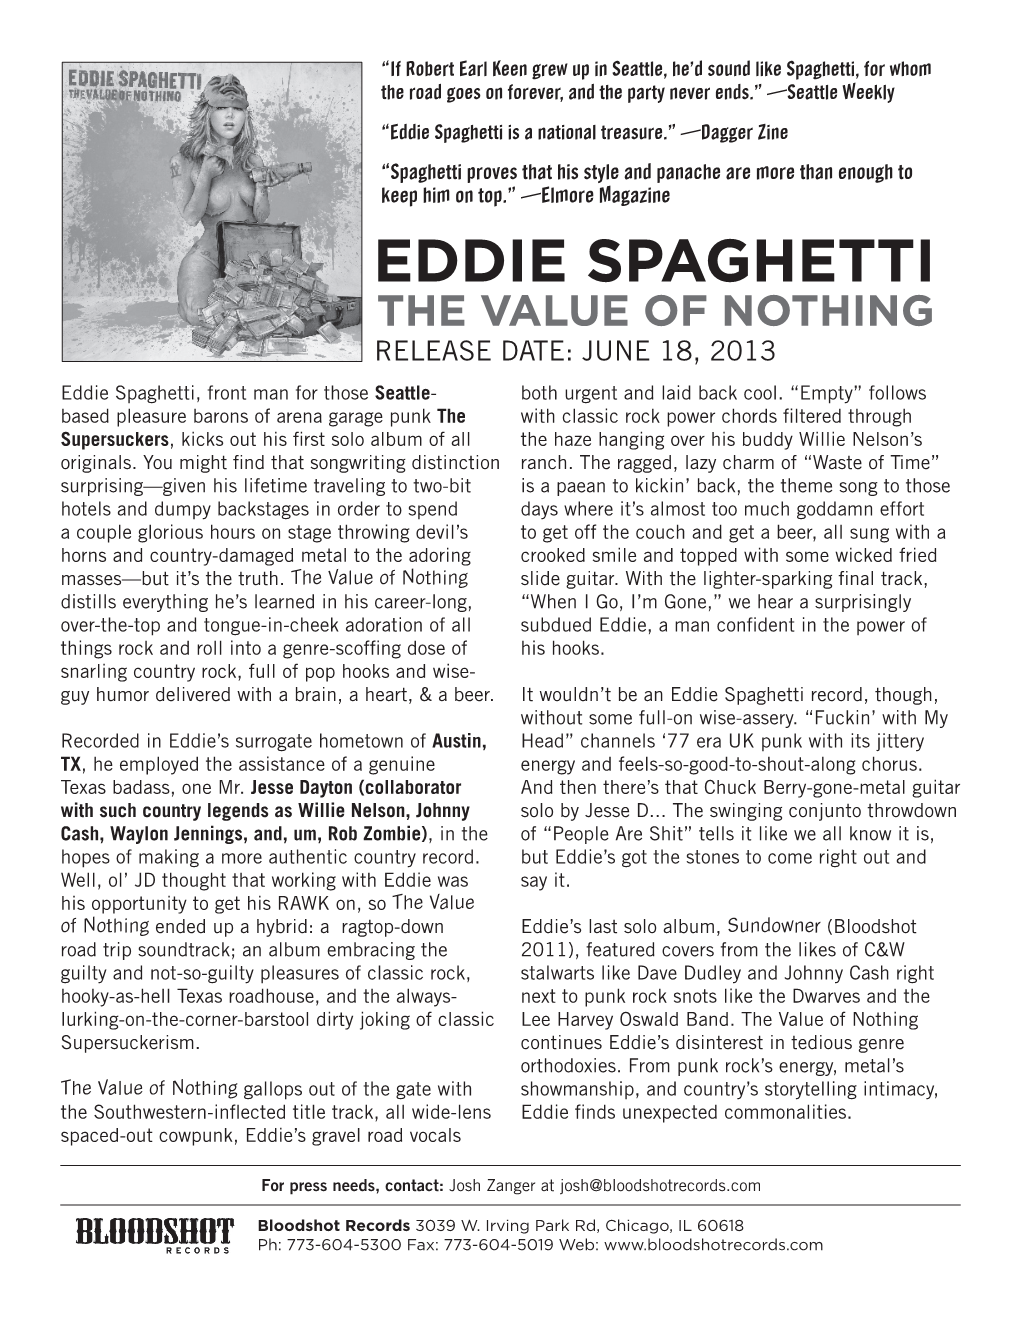 Eddie Spaghetti